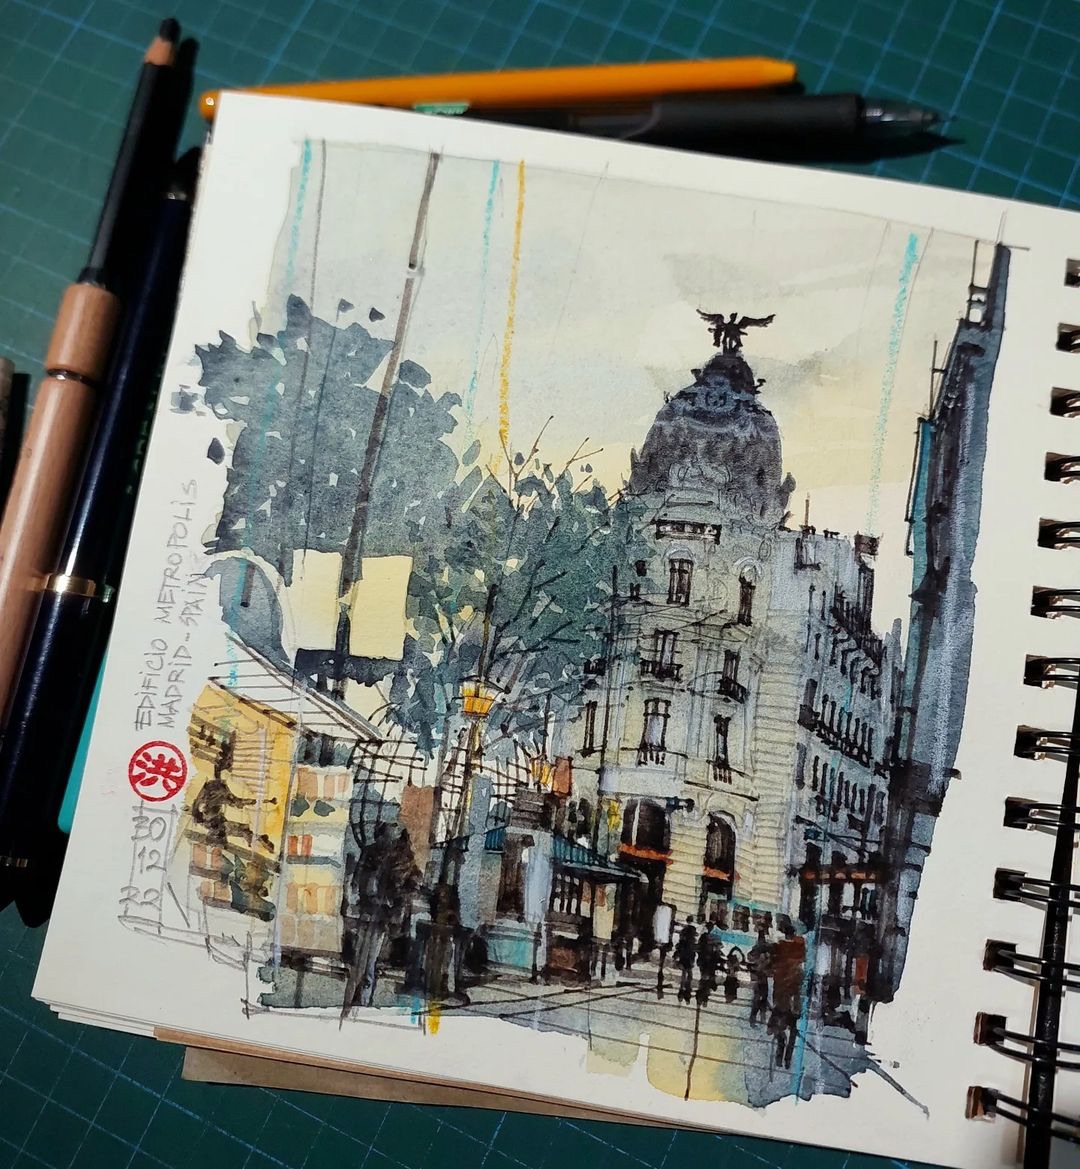 Edificio Metropolis, Madrid. #Watercolor #sketch on Delta Series #stillmanandbirn #sketchbook.
What do you think? 😃

#urbansketching #urbansketchers #architecture #davincibrushes #watercolorpainting #watercolorart